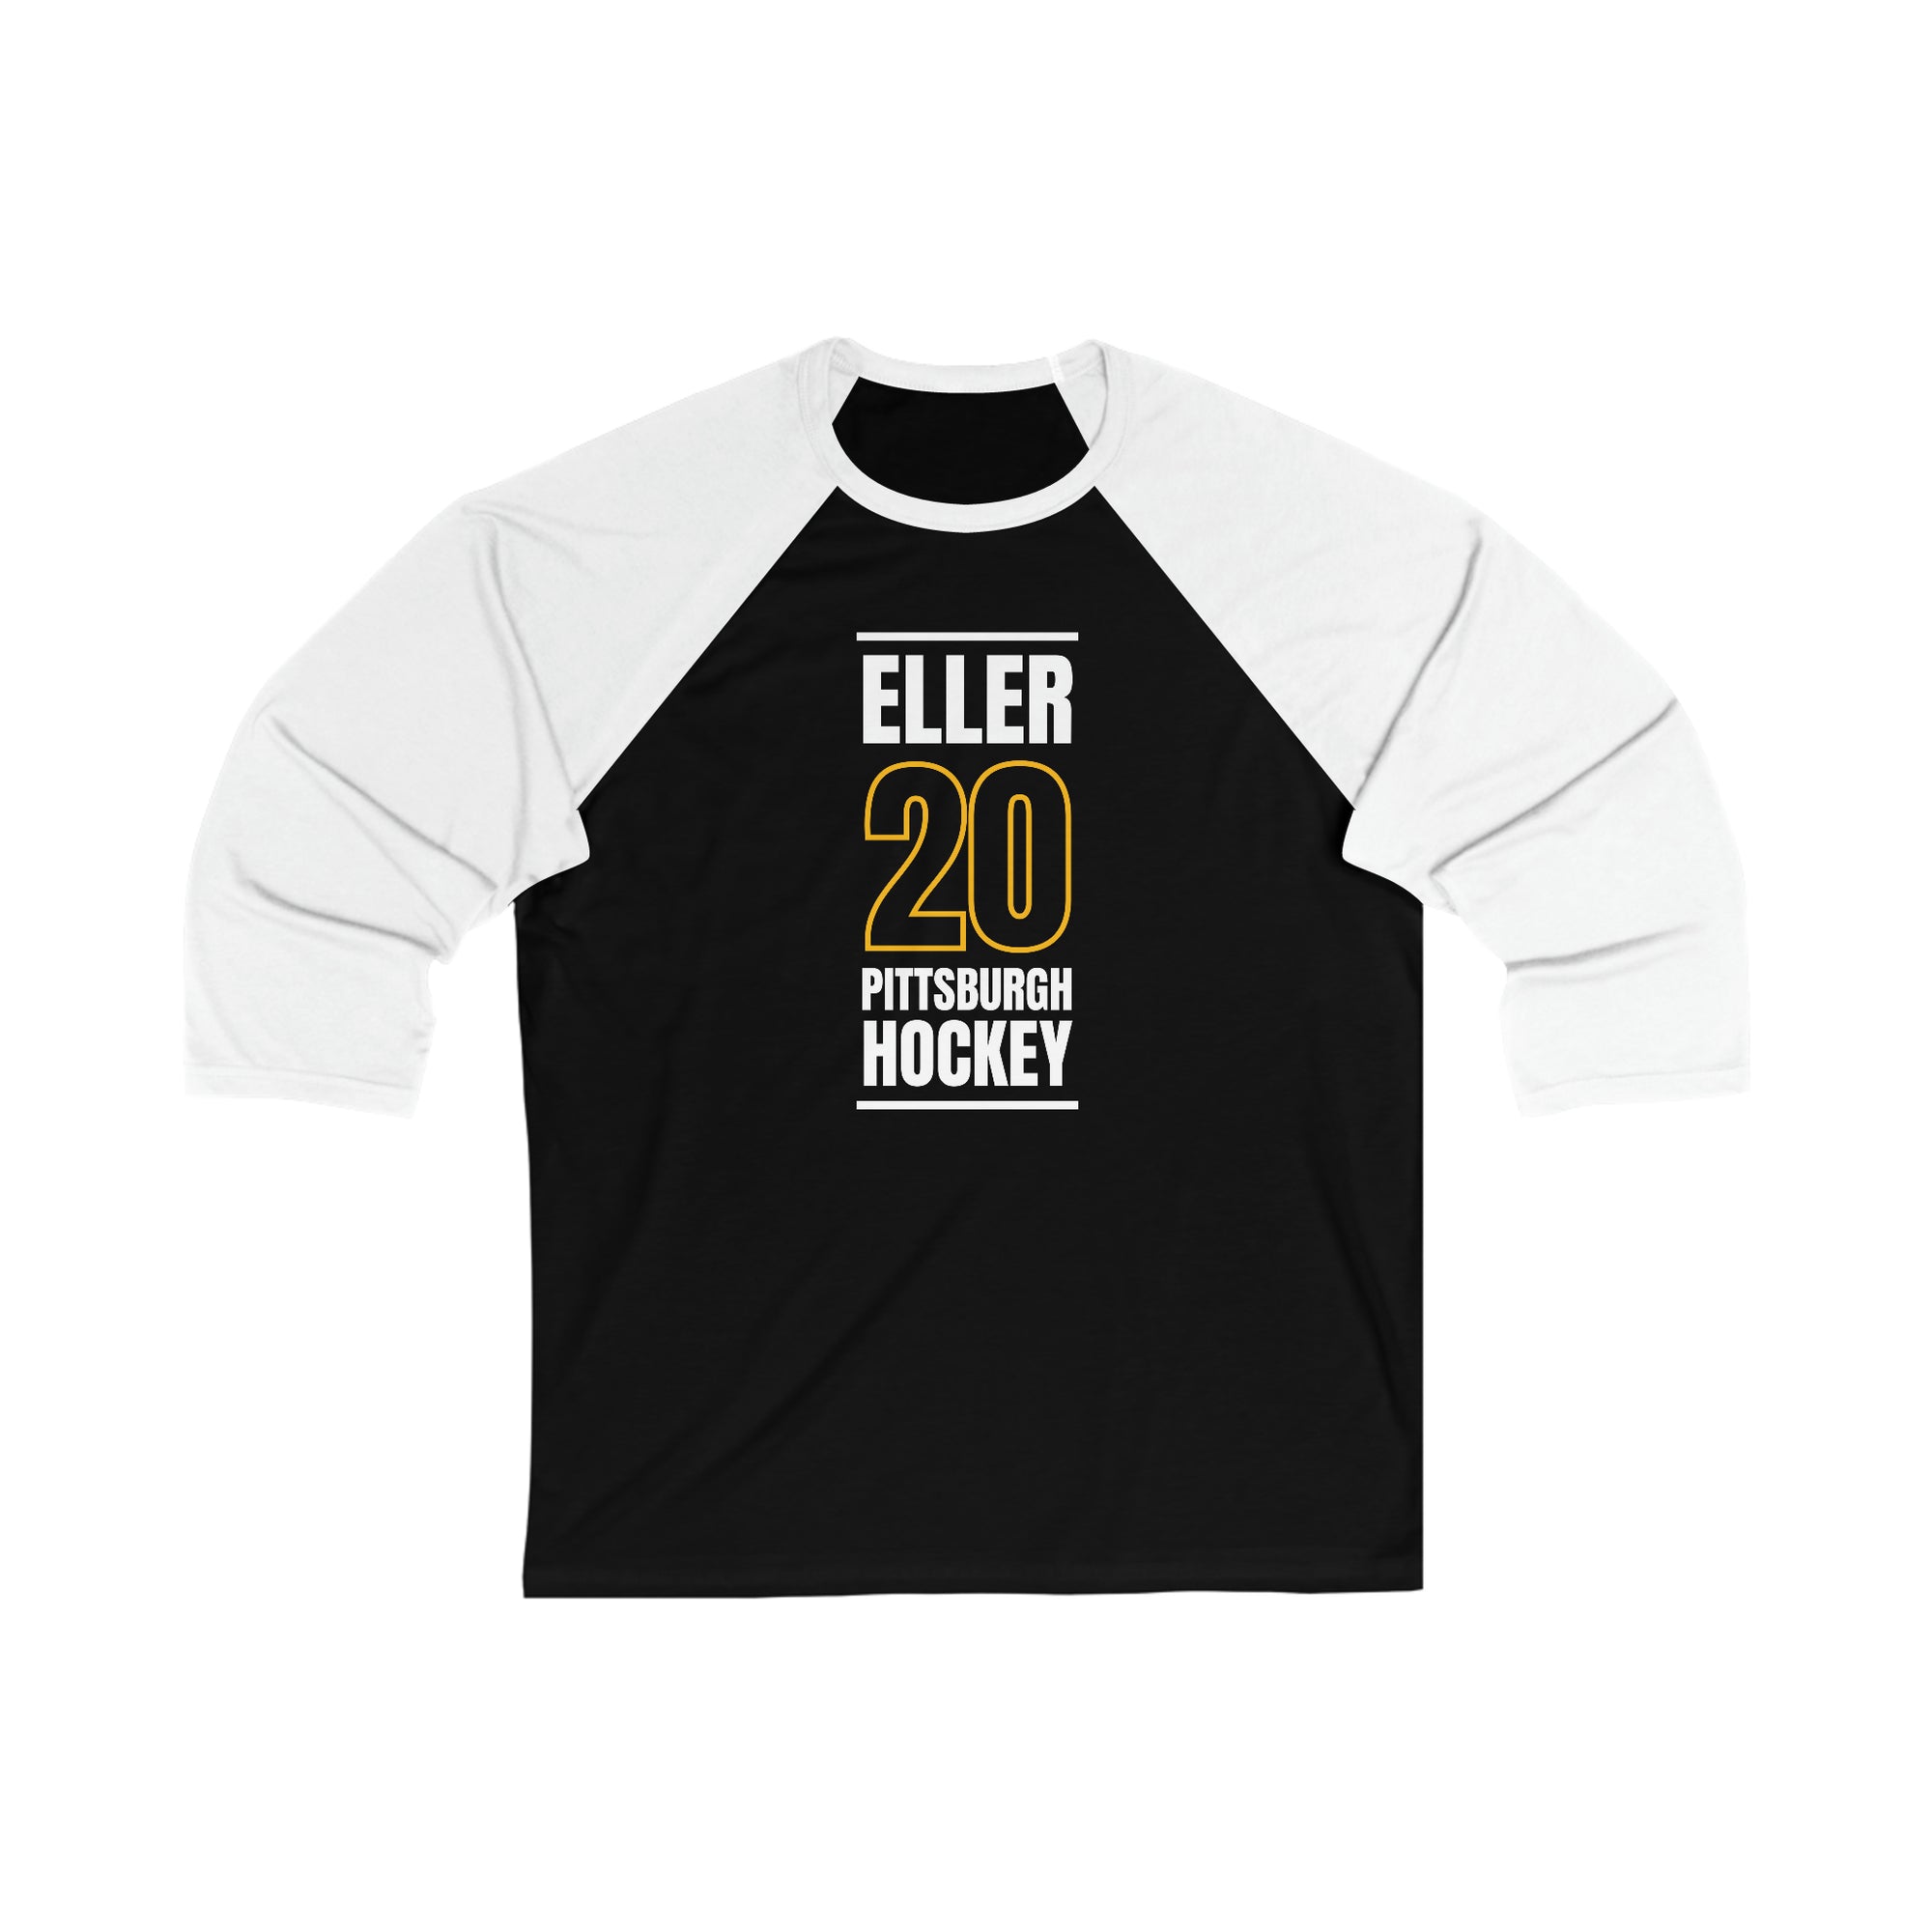 Eller 20 Pittsburgh Hockey Black Vertical Design Unisex Tri-Blend 3/4 Sleeve Raglan Baseball Shirt